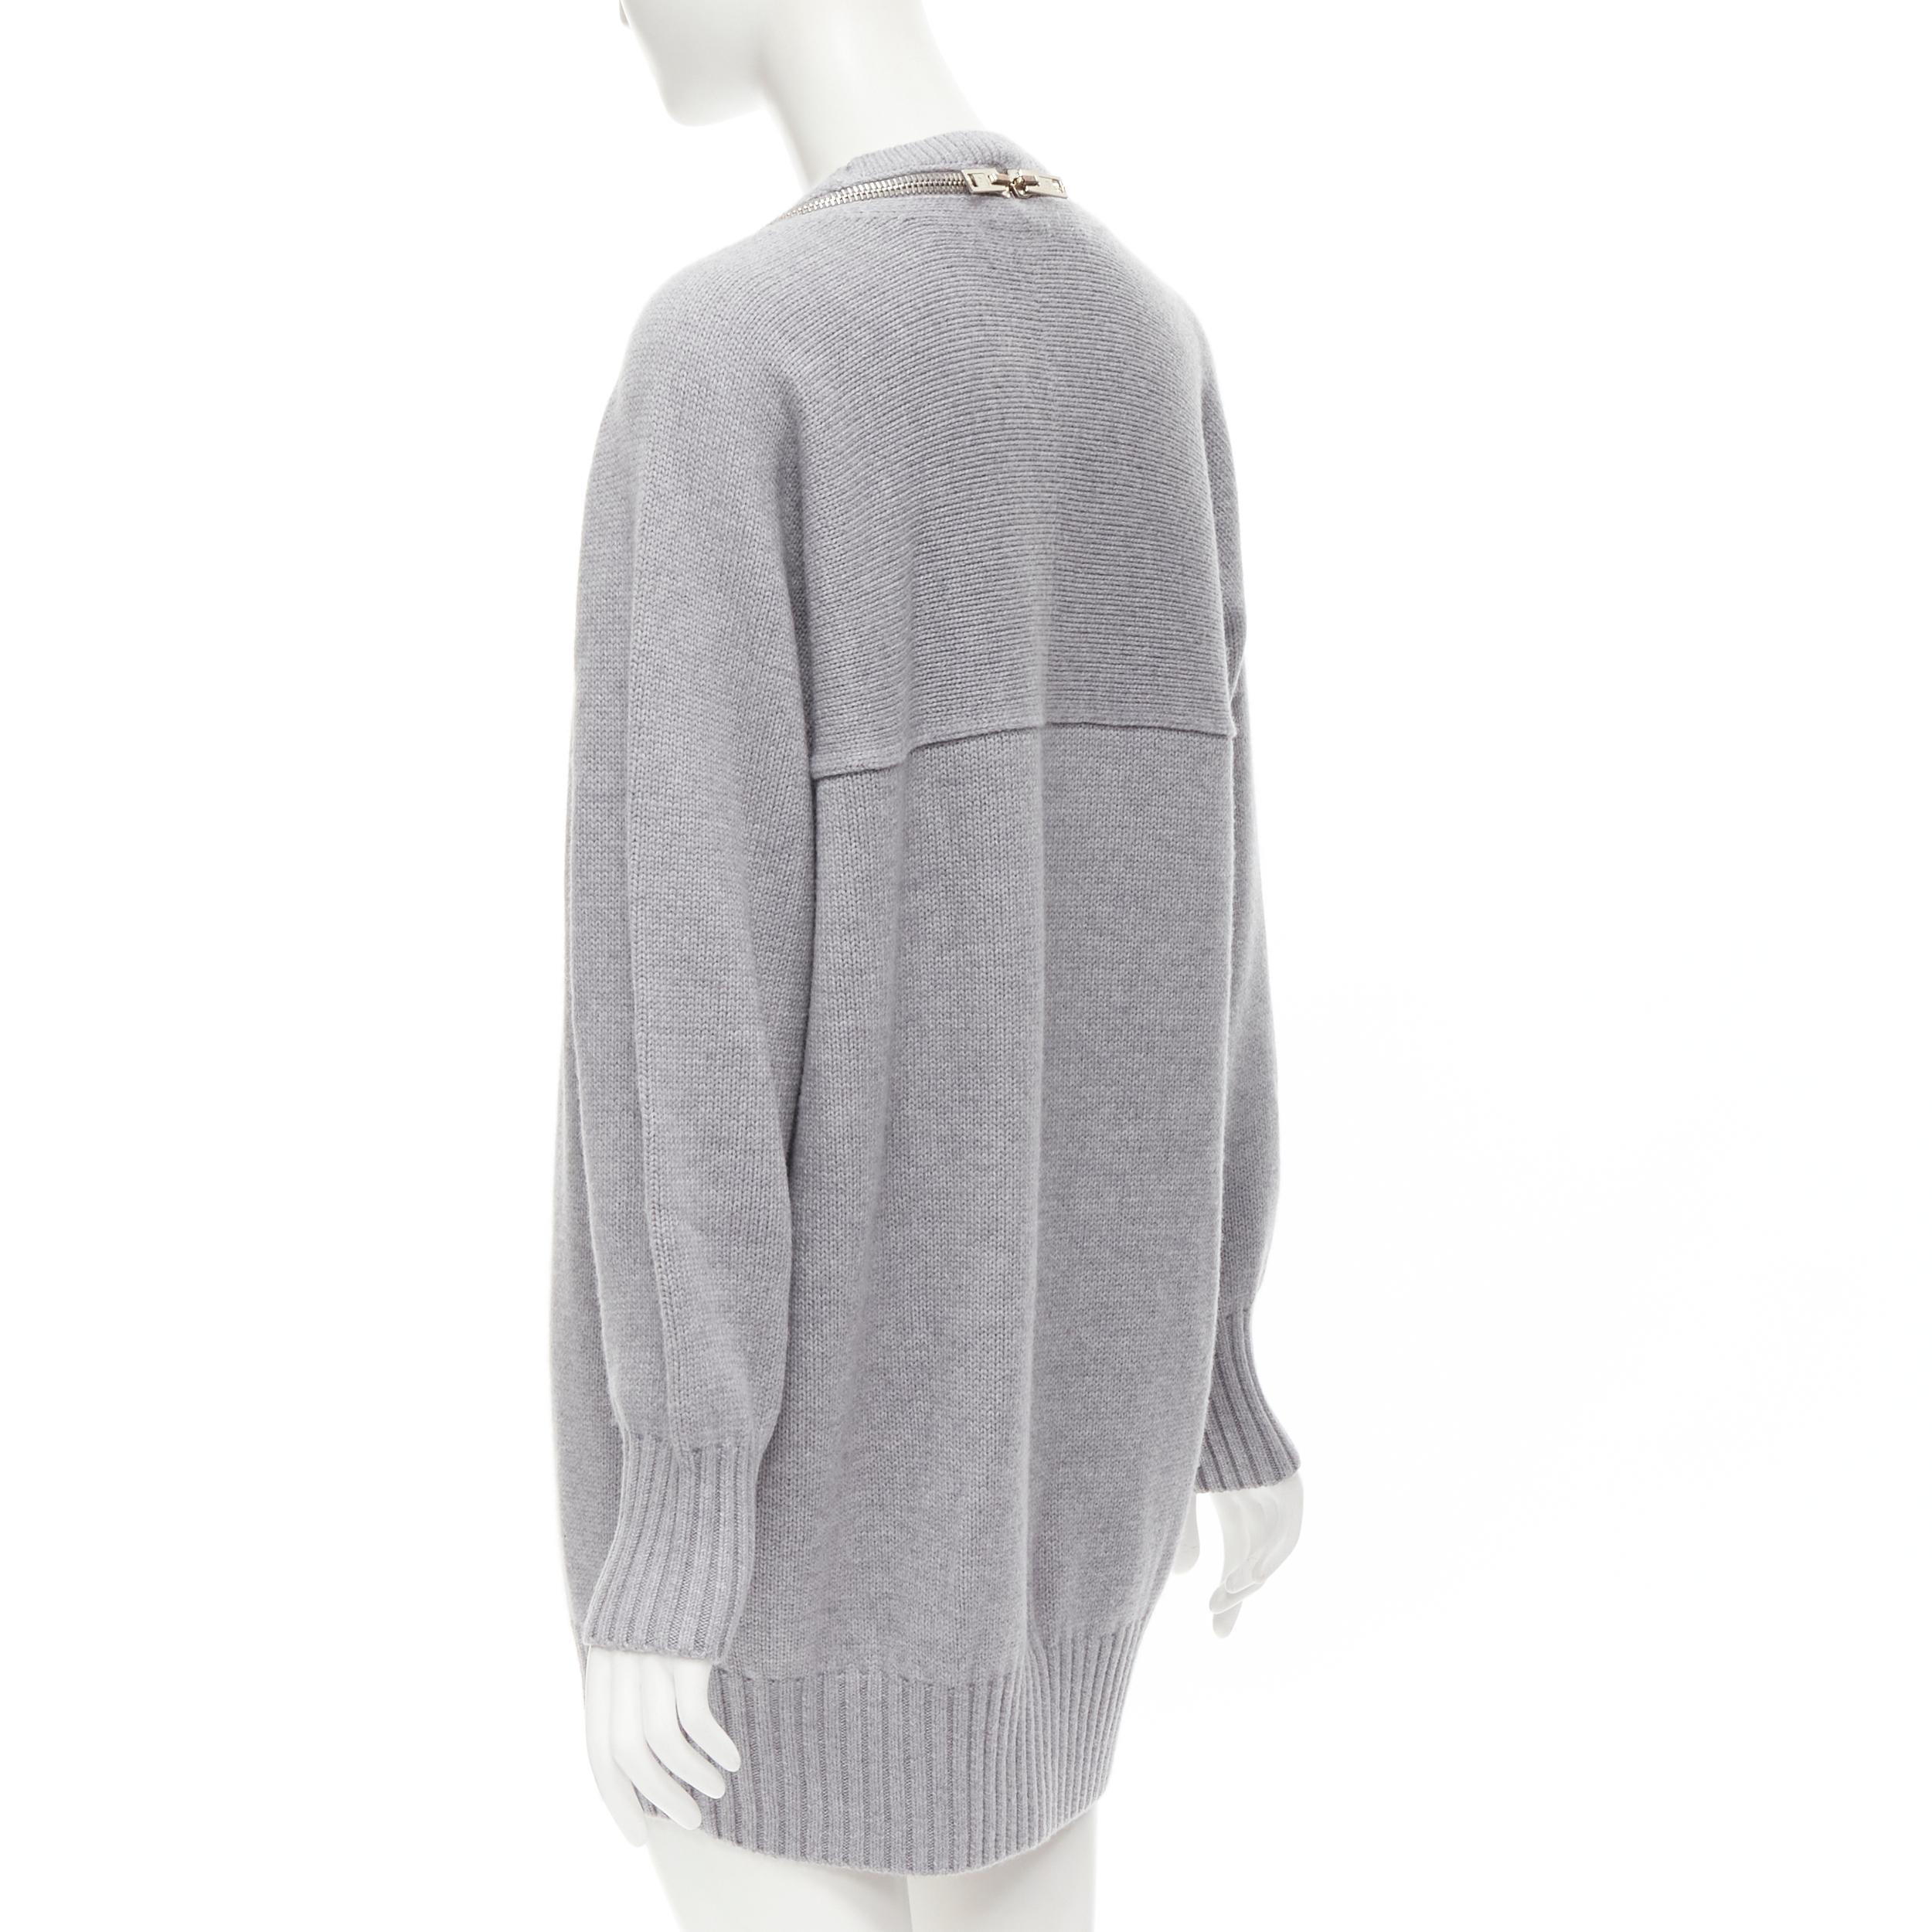 ALEXANDER WANG grey merino wool chunky knit zip trim sweater dress M 3